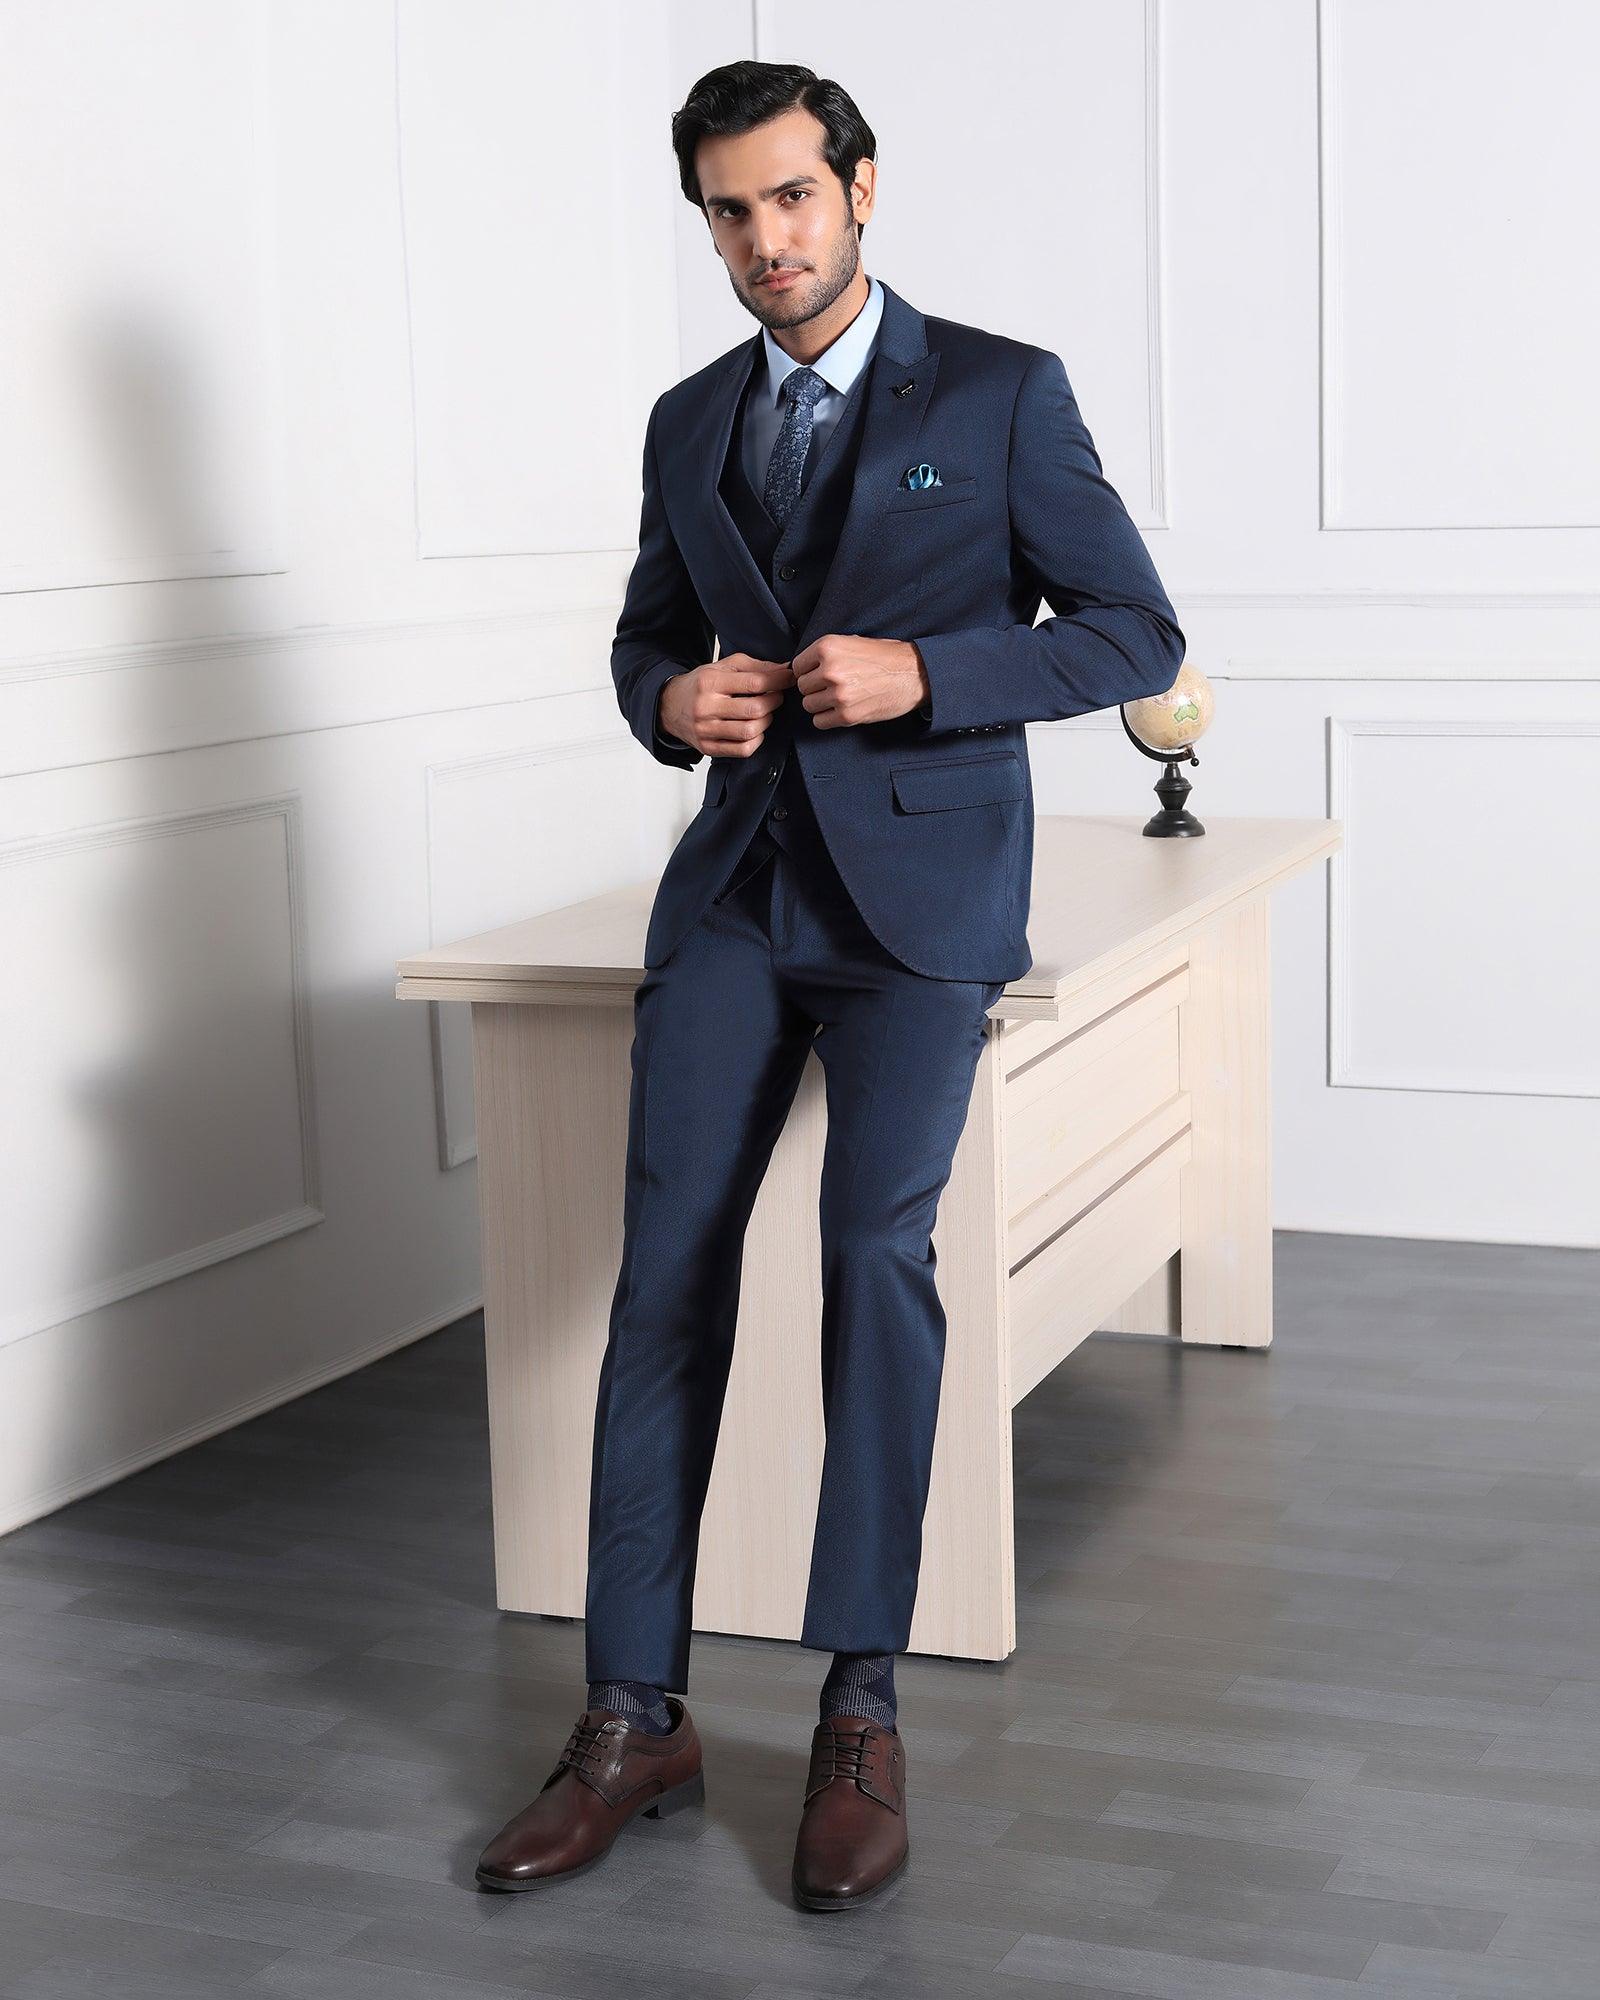 Buy Navy Blue Three Piece Suit for Men Slim Fit, Wedding, Formal